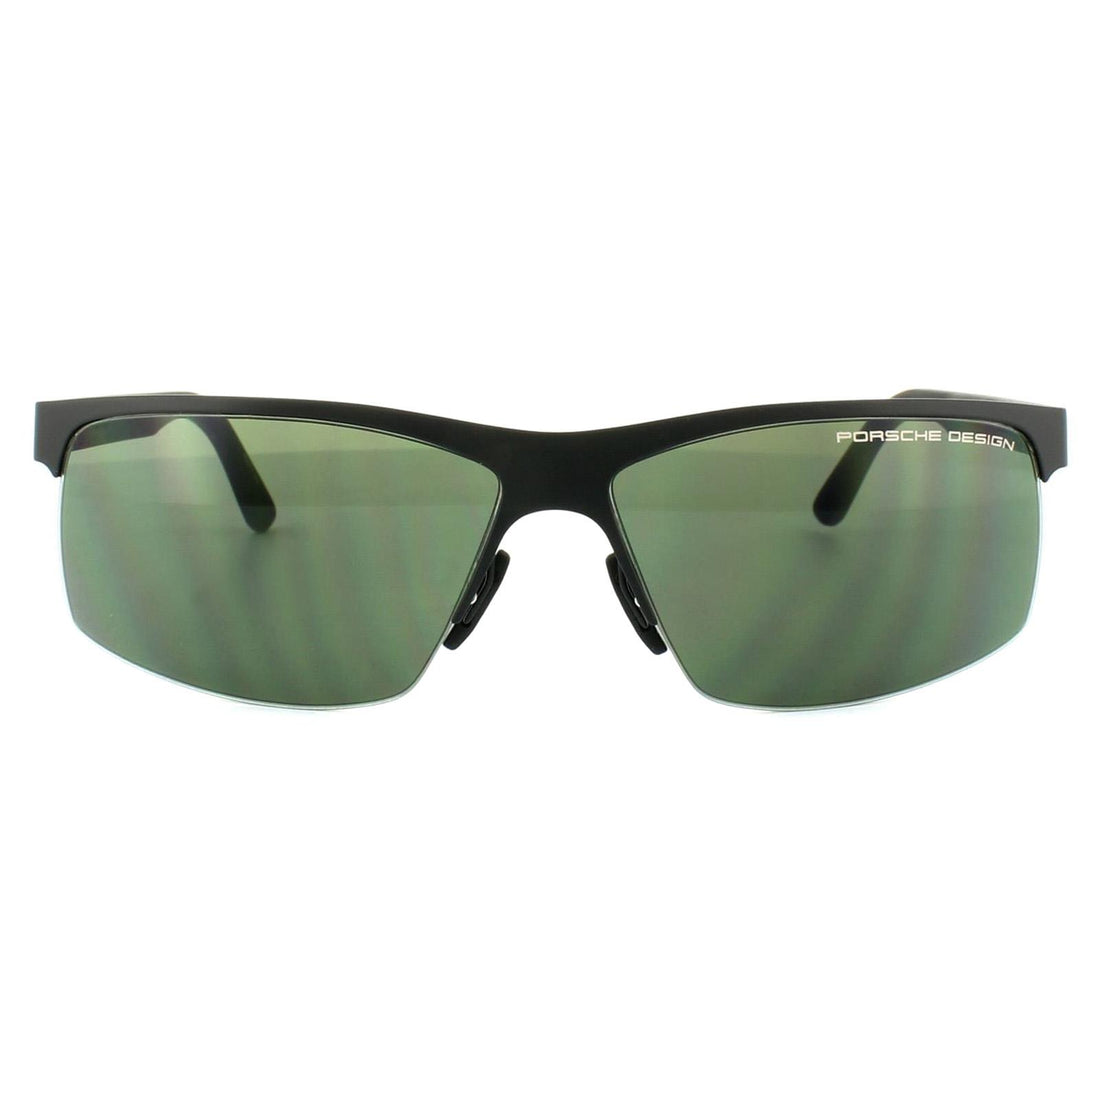 Porsche Design P8561 Sunglasses Black / Green